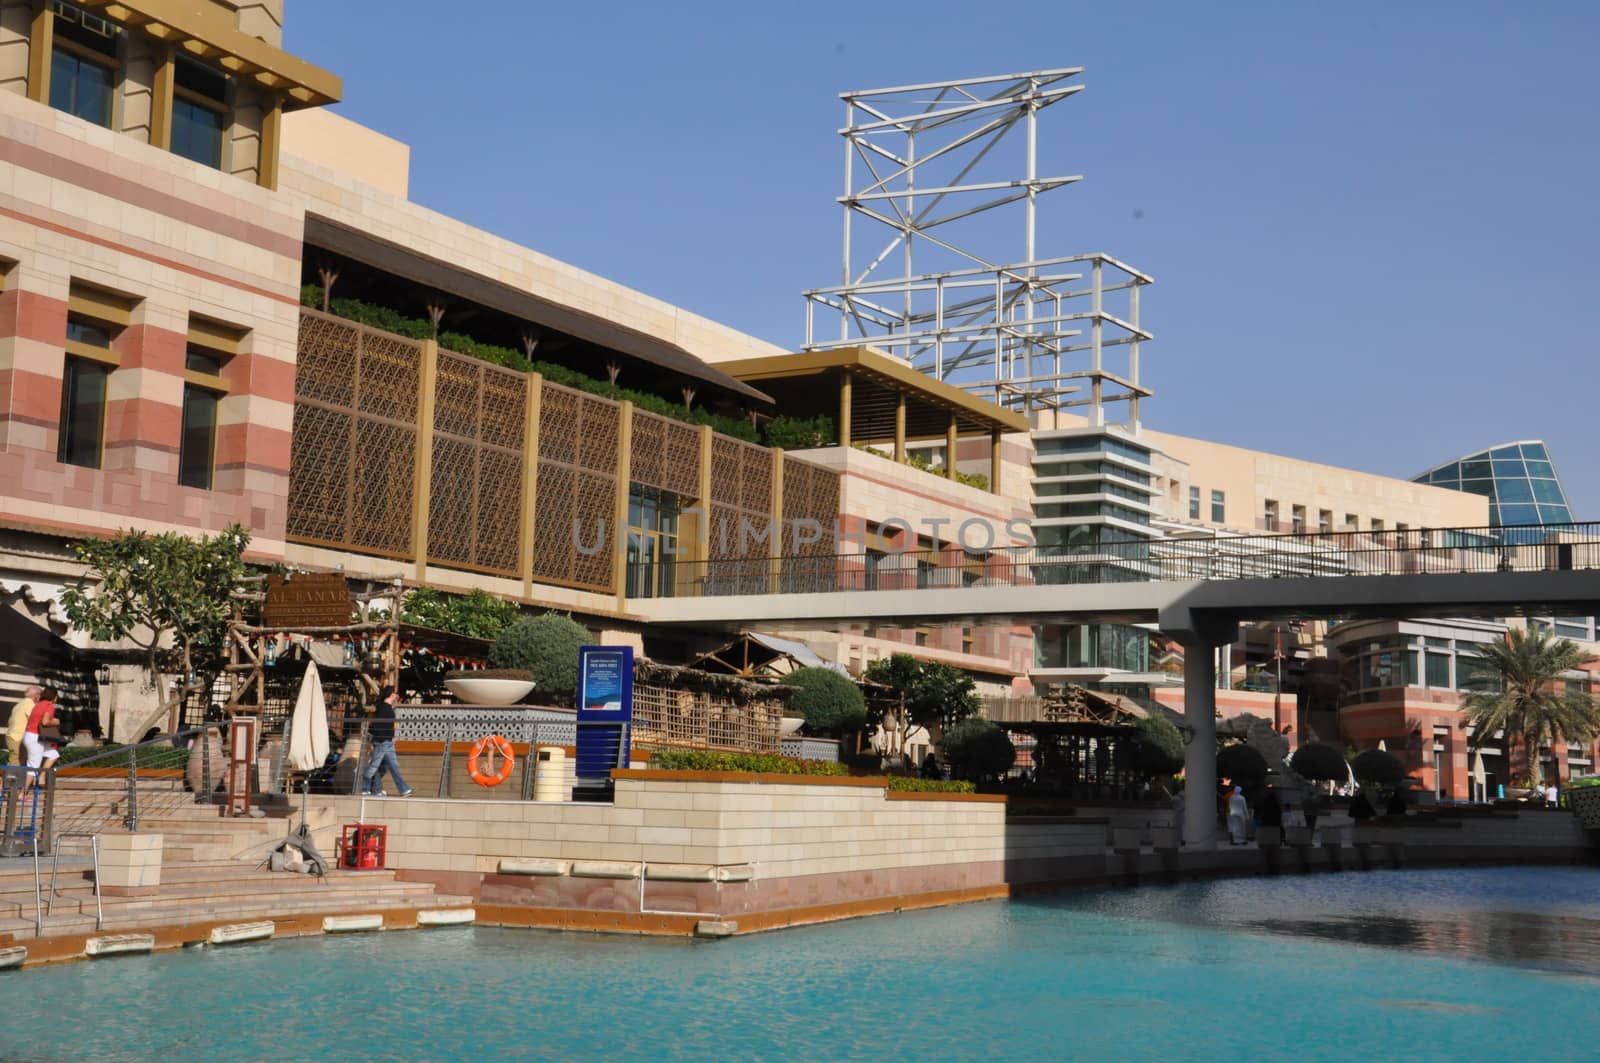 Festival Centre Waterfront in Dubai, UAE. Dubai Festival City is the Middle East's largest mixed-use development.